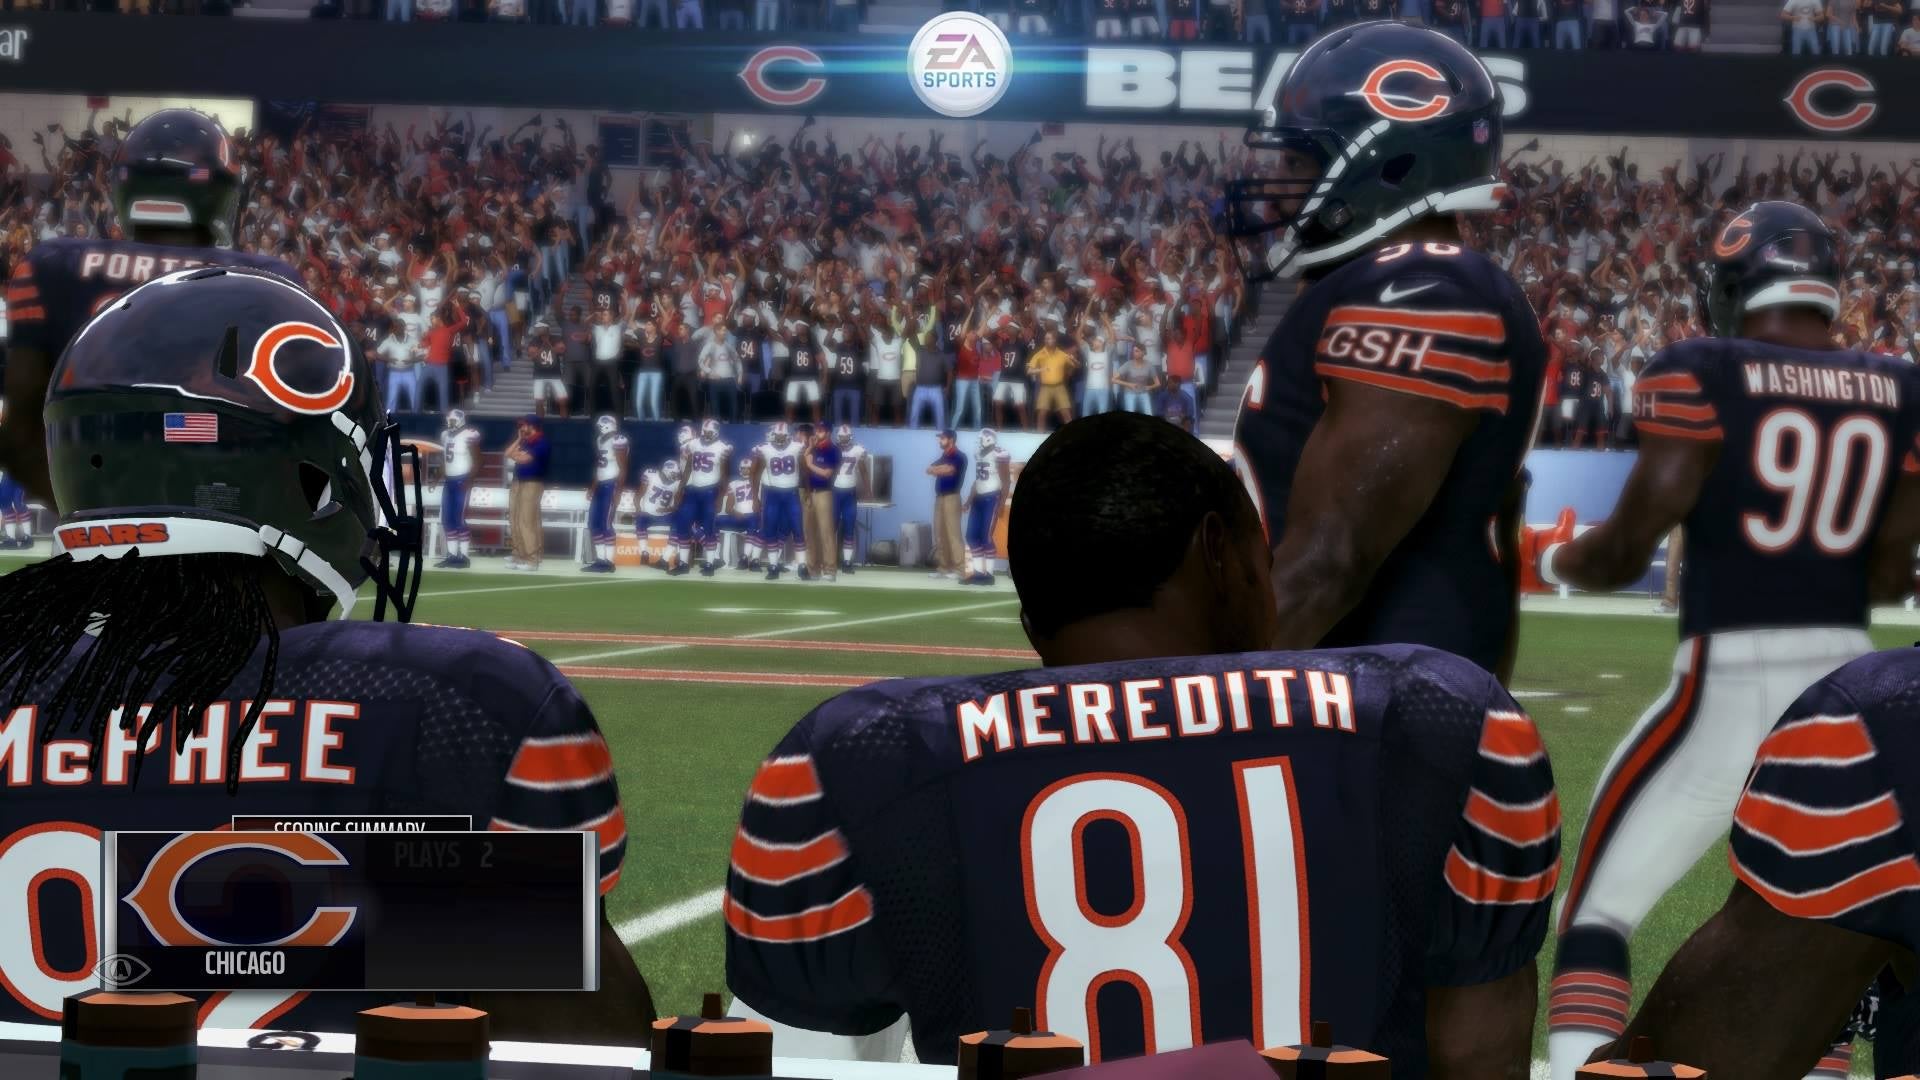 Madden 18 gameplay screenshot of Chicago Bears players on field.